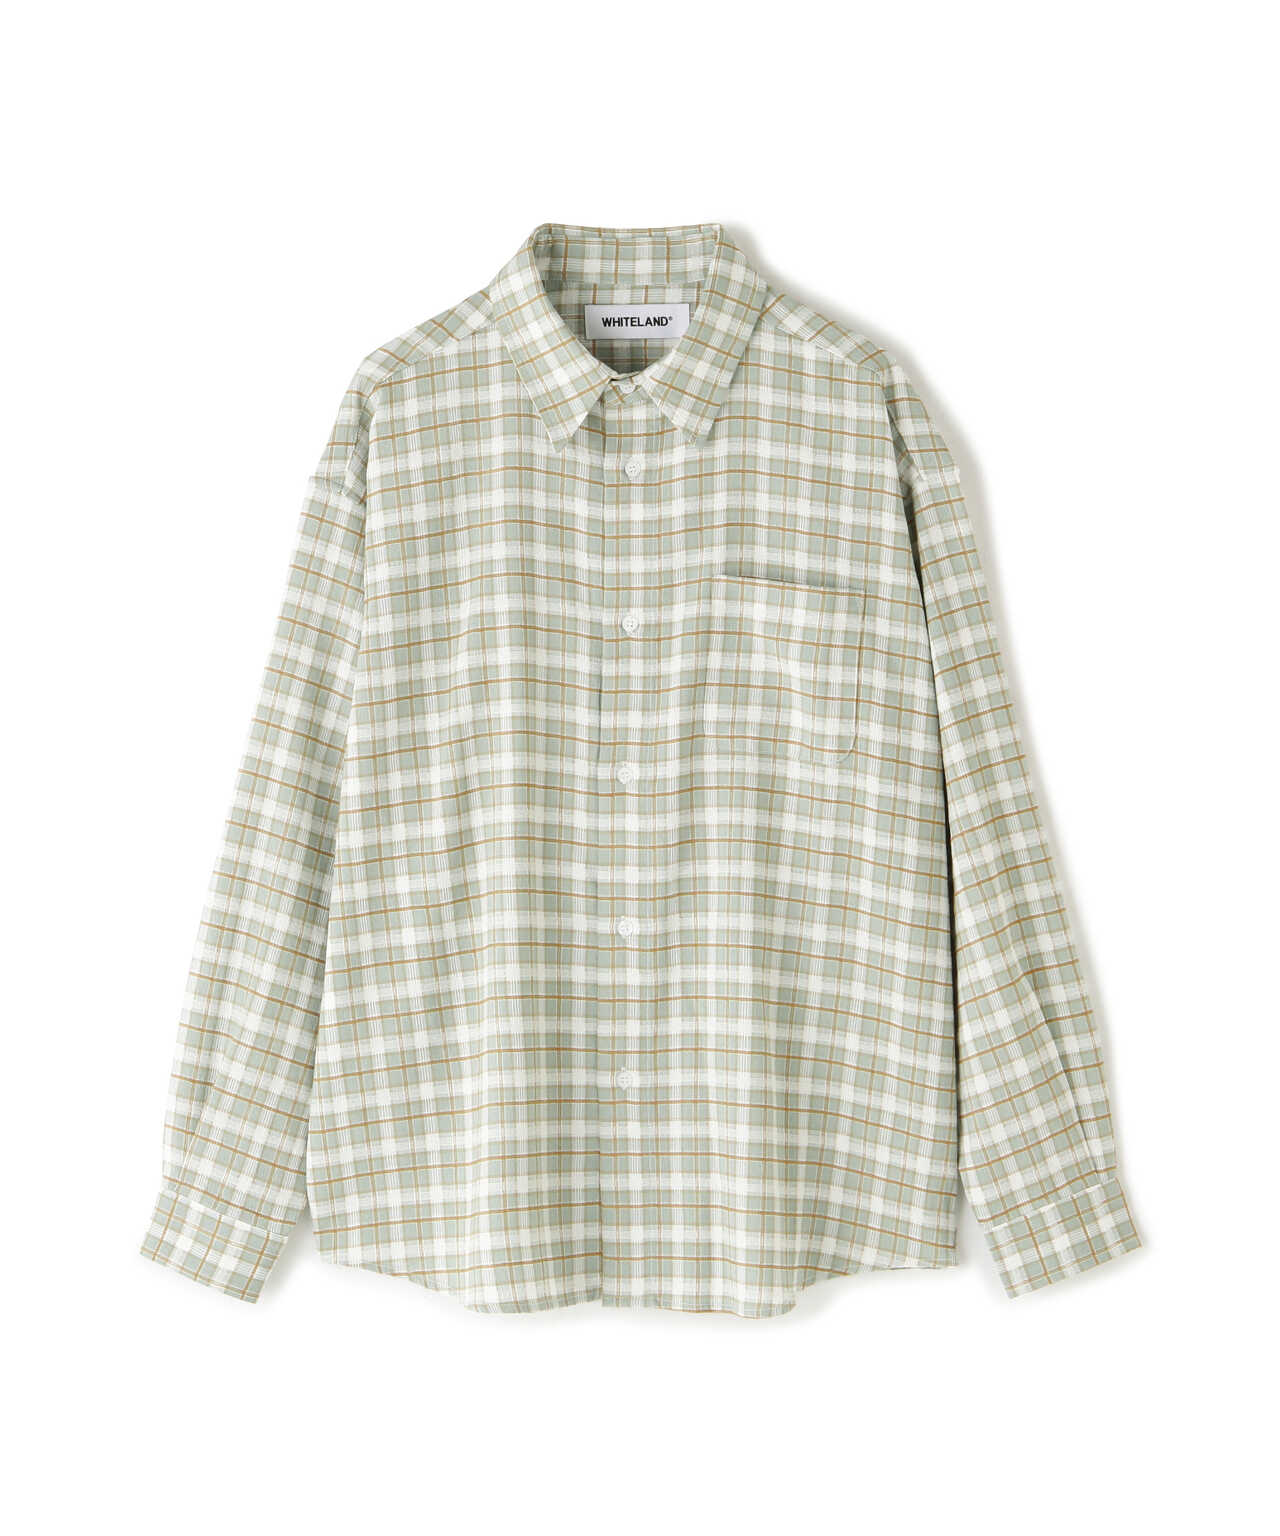 WHITELAND/ホワイトランド/CHECK SHIRT/チェックシャツ | LHP